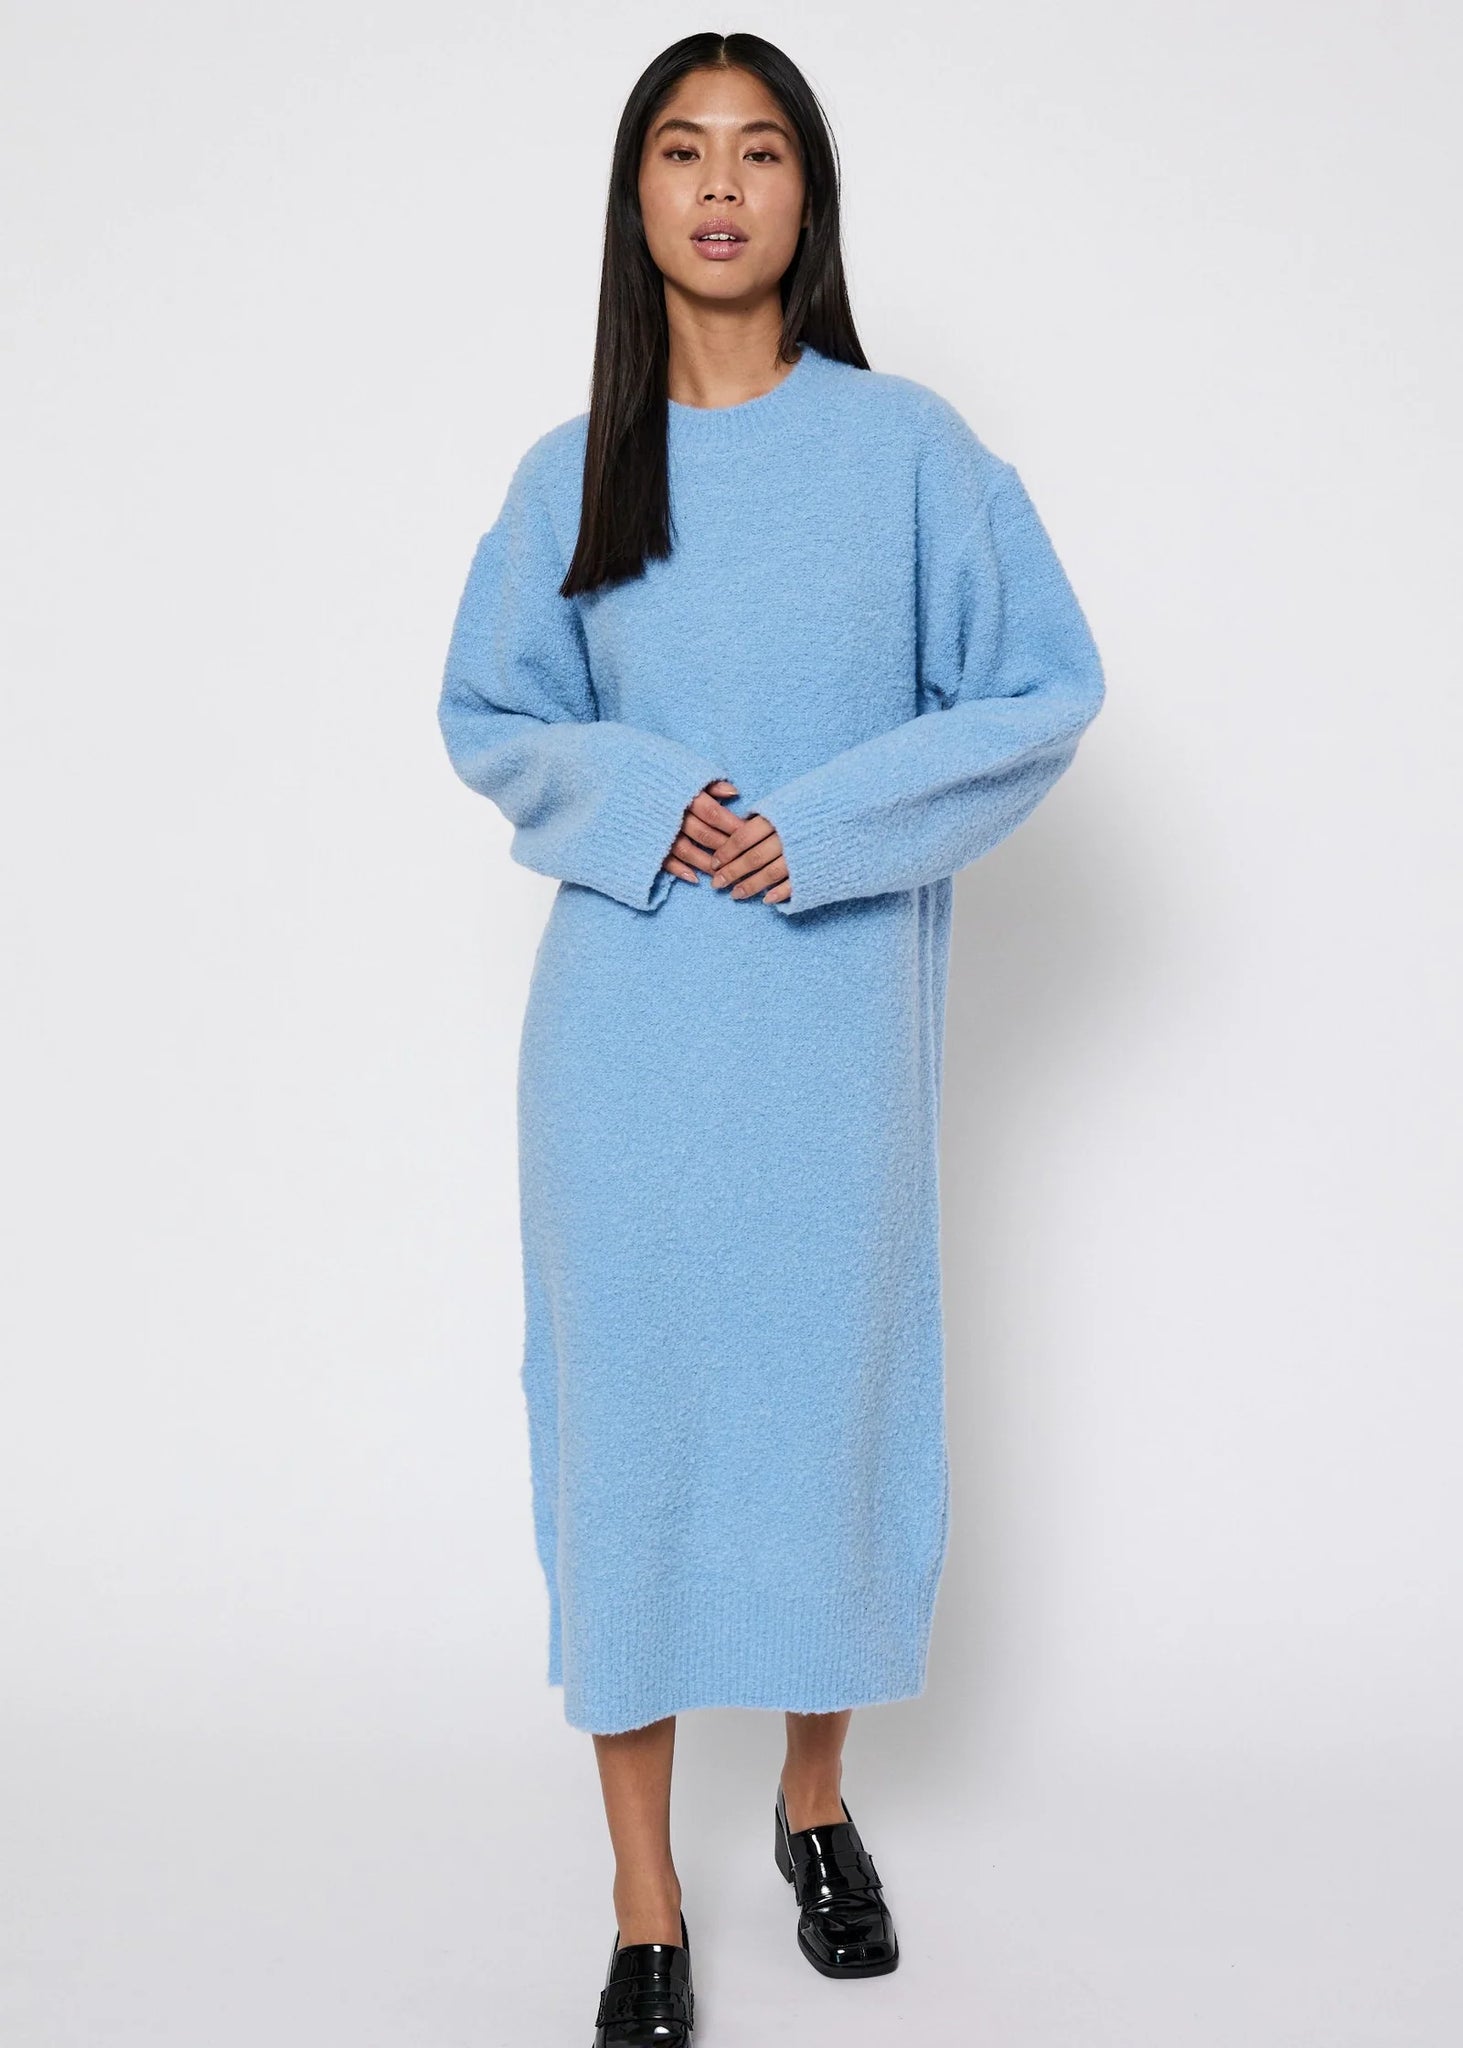 Vica knit dress in light blue